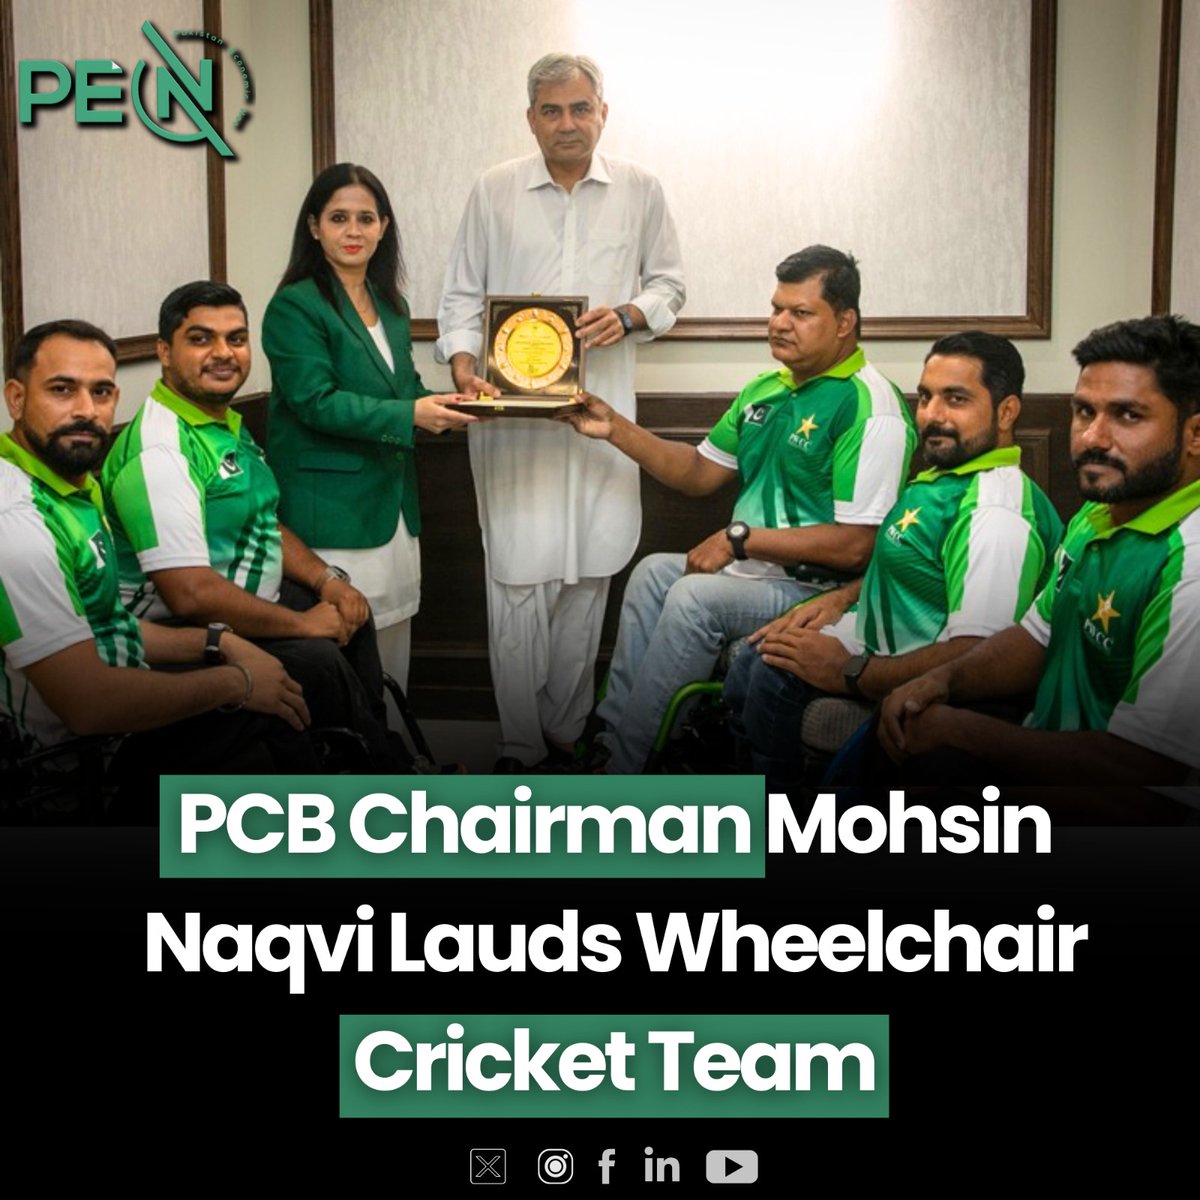 #PCB Chairman Mohsin Naqvi lauds Wheelchair #Cricket Team pakeconet.com.pk/story/118216/p…